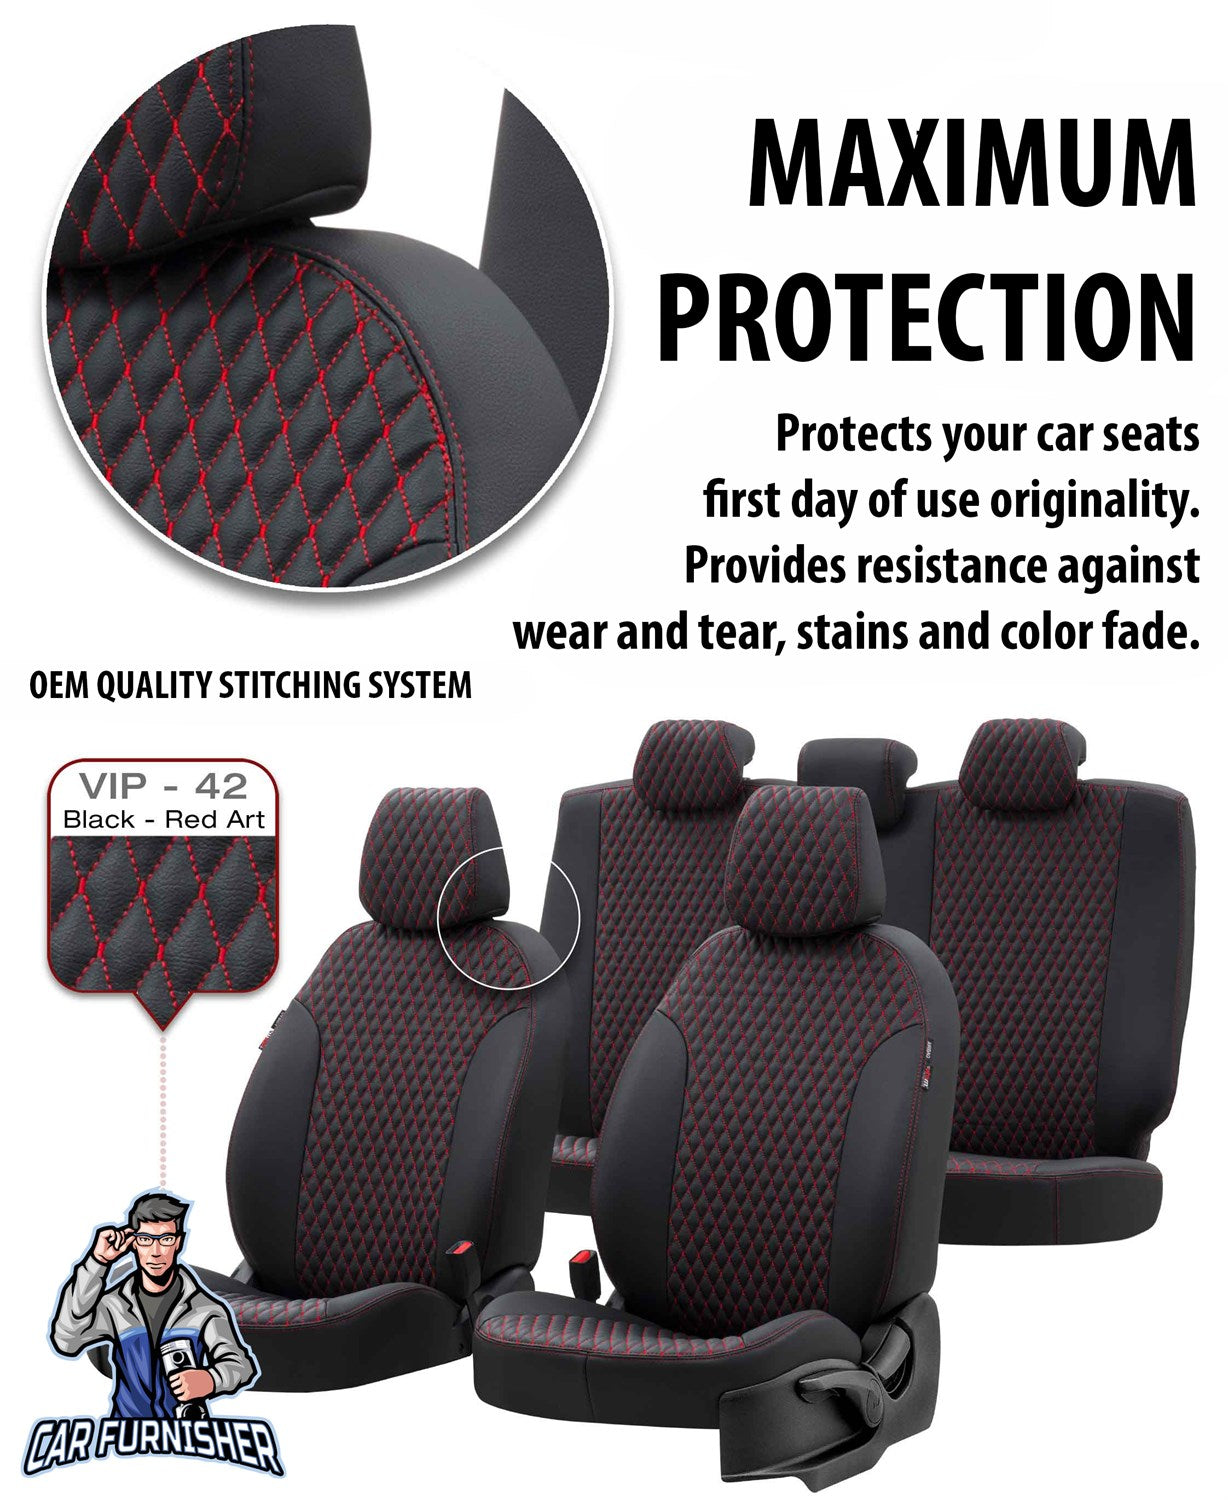 Kia Sportage Seat Covers Amsterdam Leather Design Black Leather